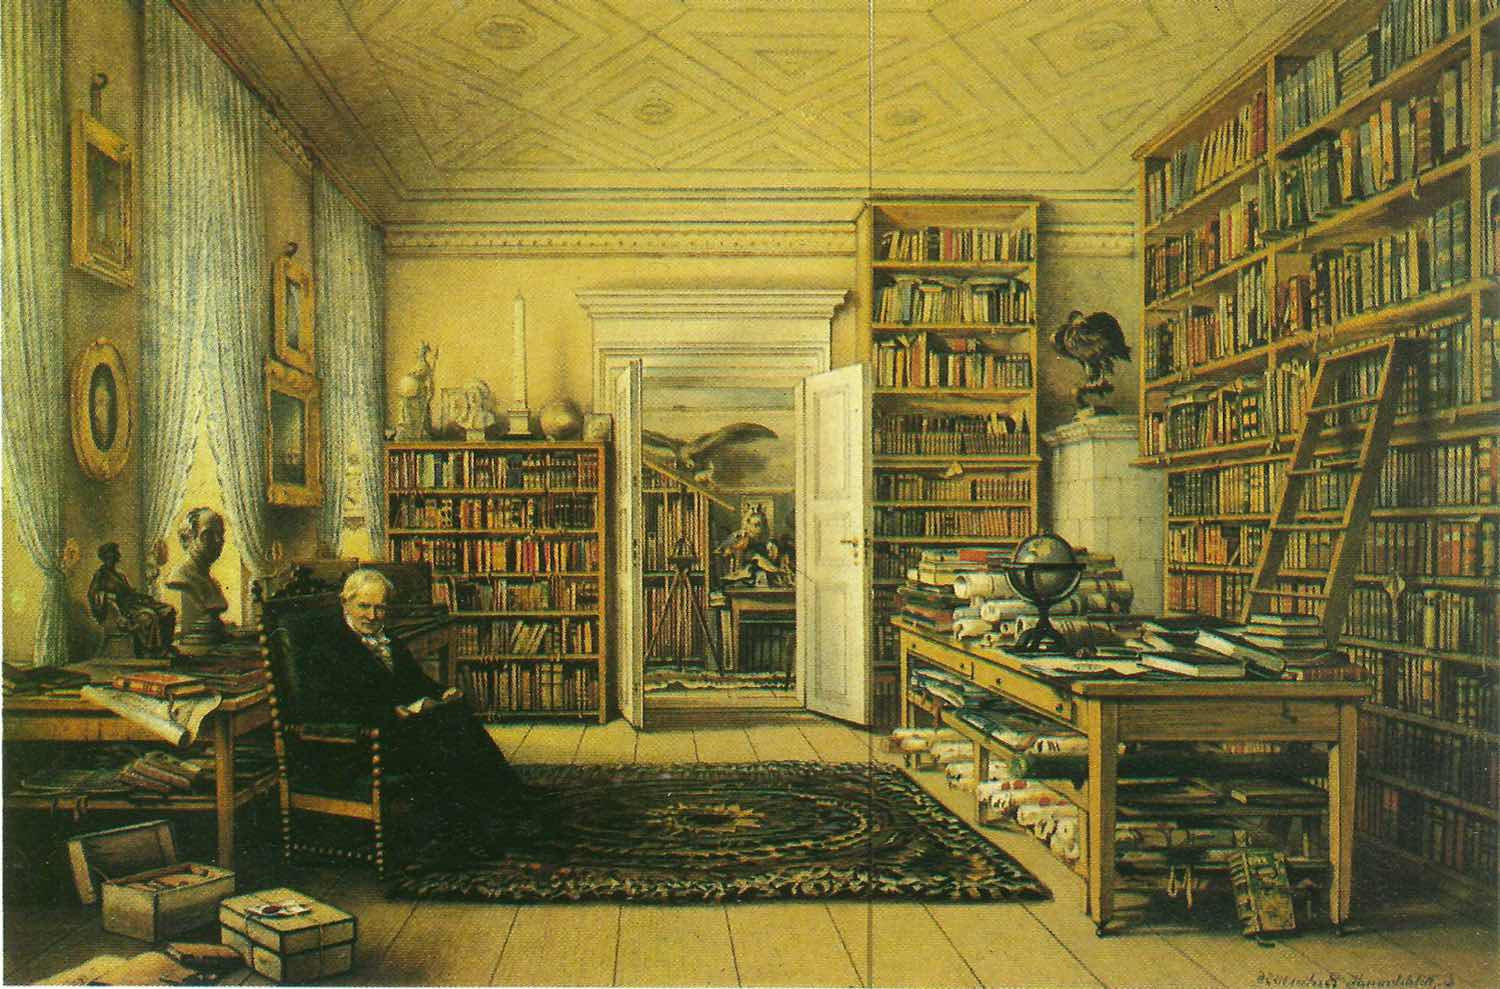 Painting of Alexander von Humboldt in his study